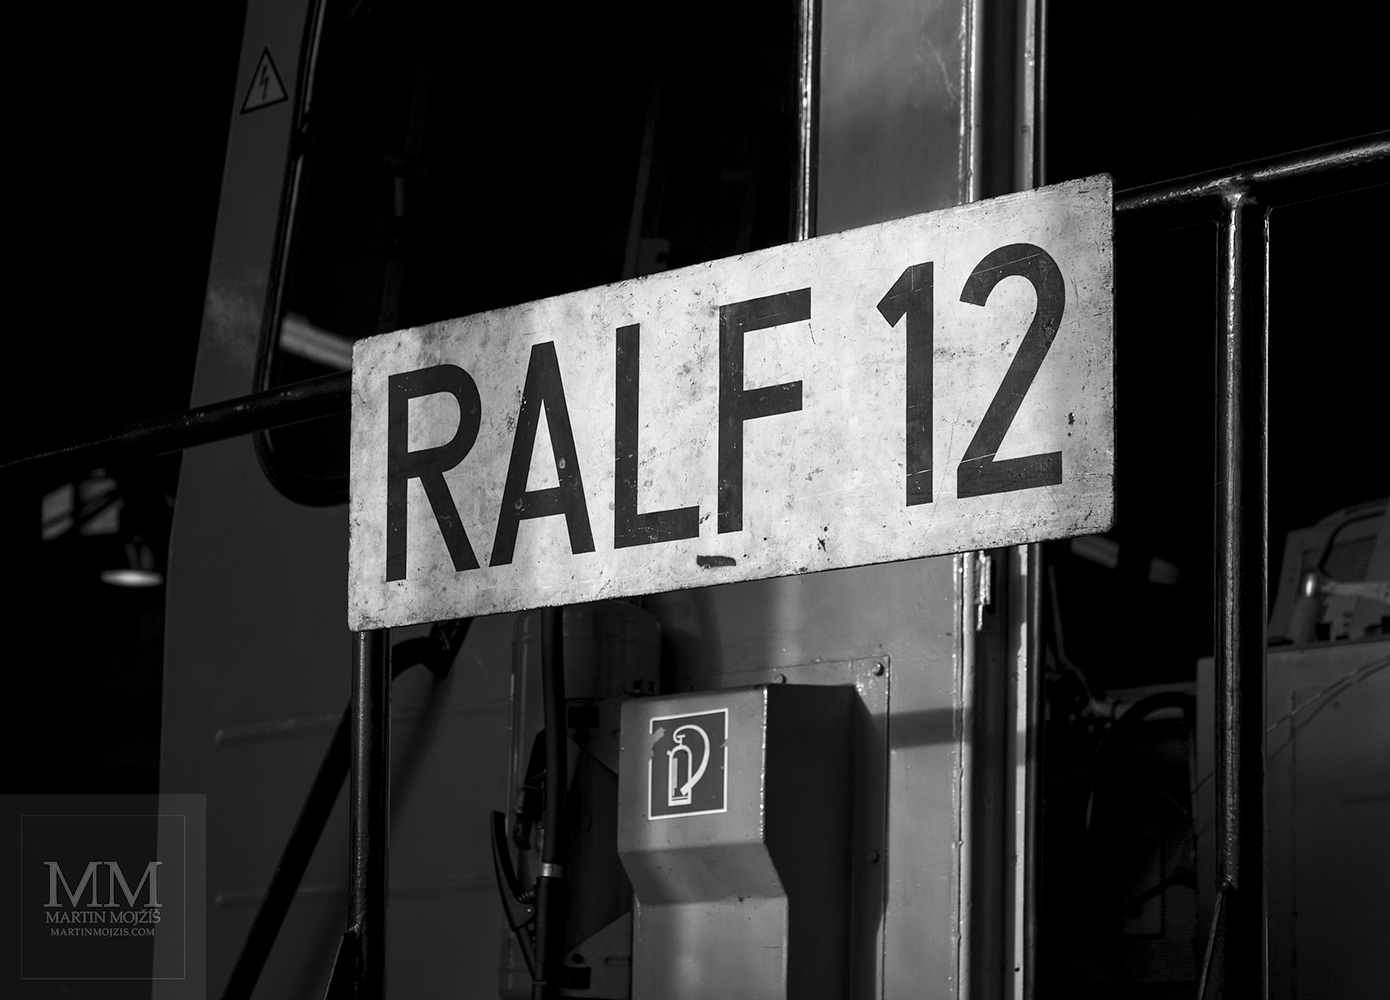 The inscription RALF 12 on the locomotive. Eisenbahnmuseum Dresden – Dresden Railway Museum.